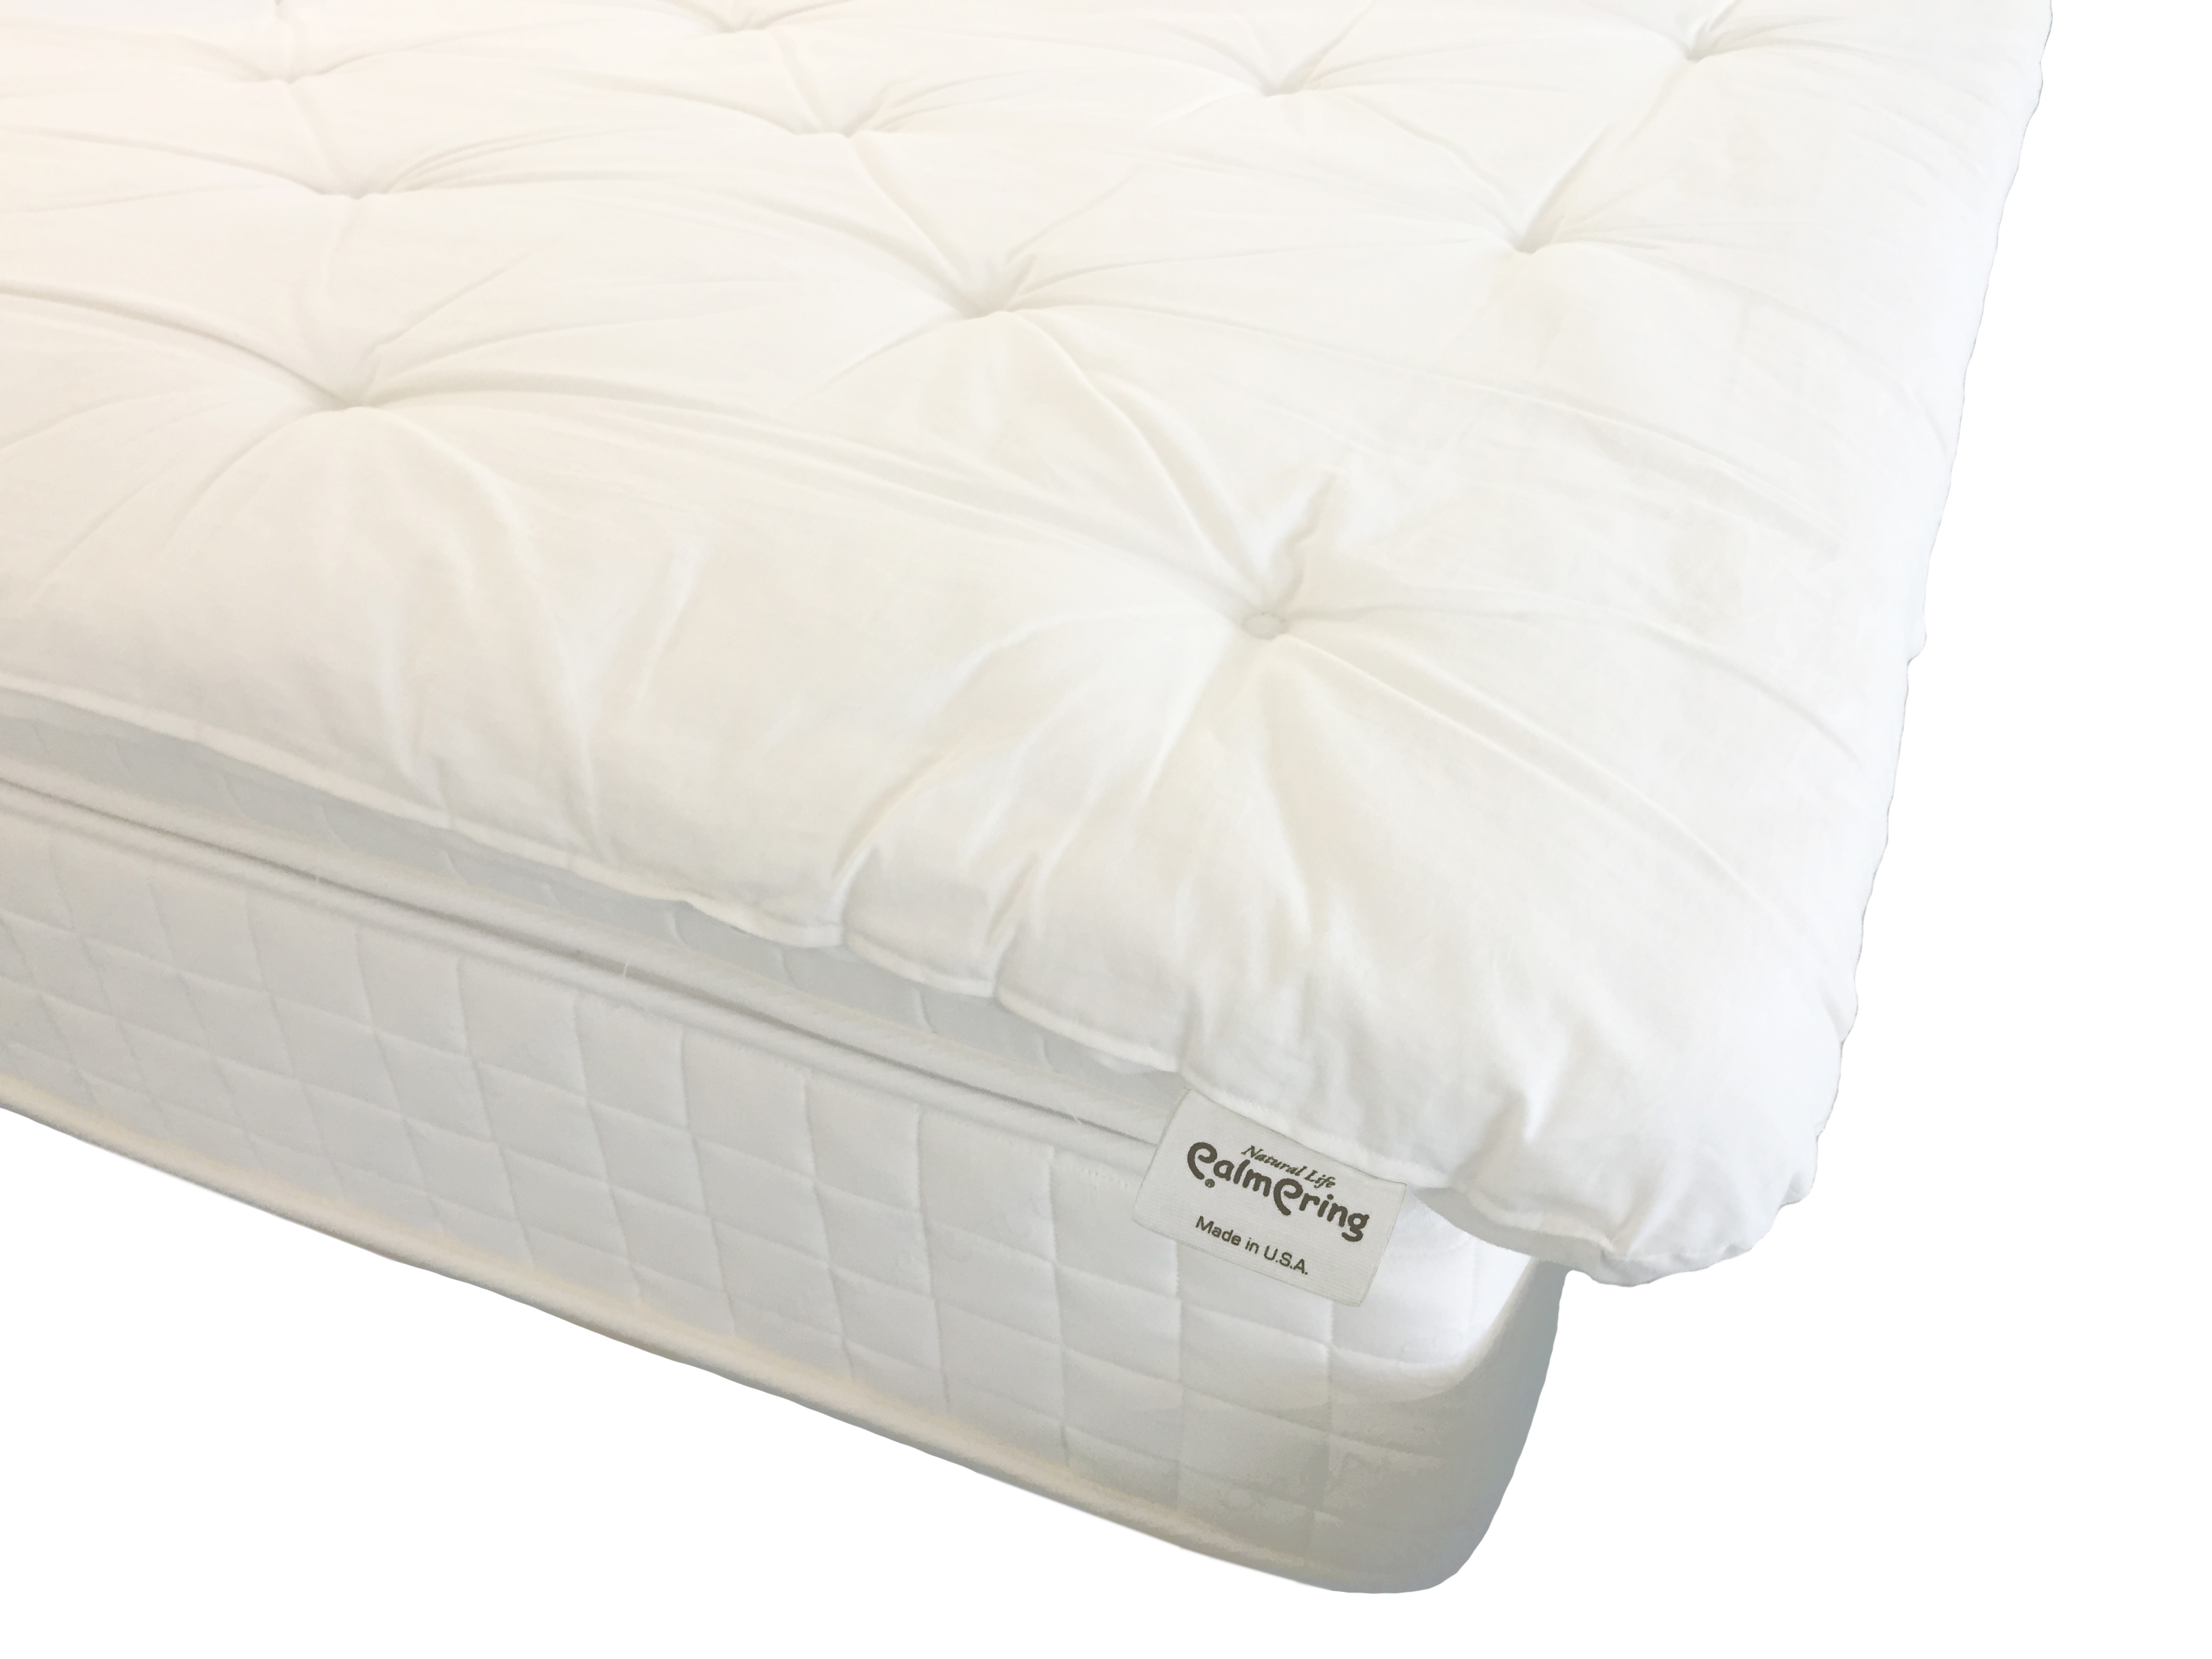 wool mattress pad for tempurpedic